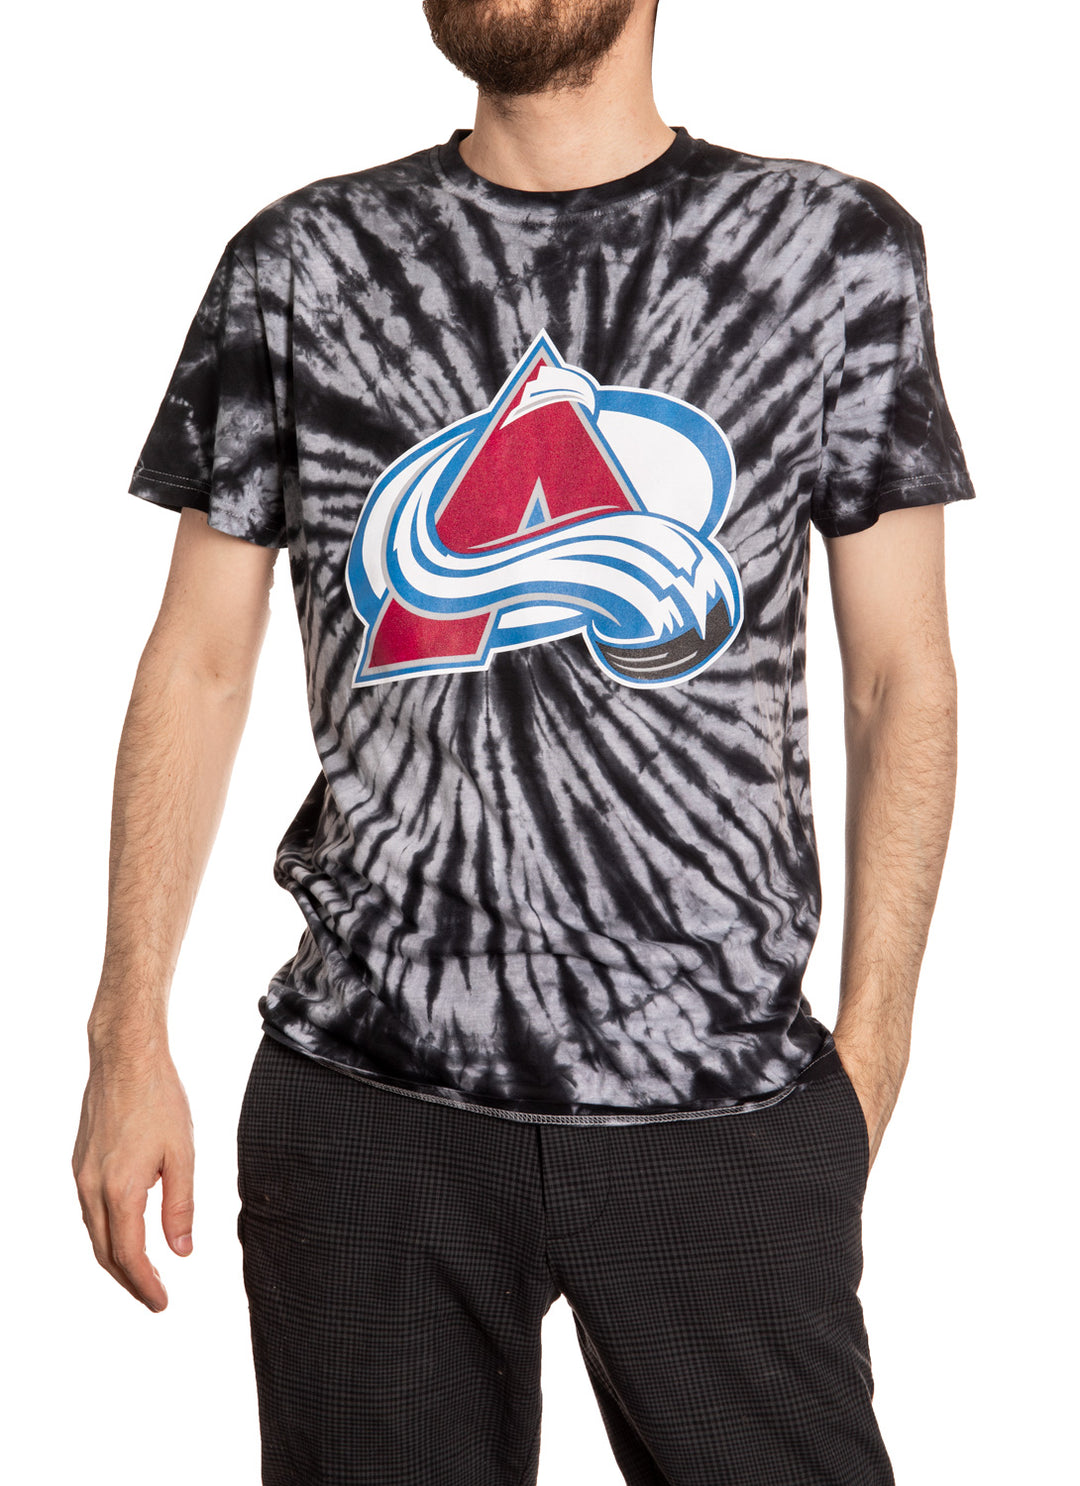 Colorado Avalanche Spiral Tie Dye T-Shirt for Men